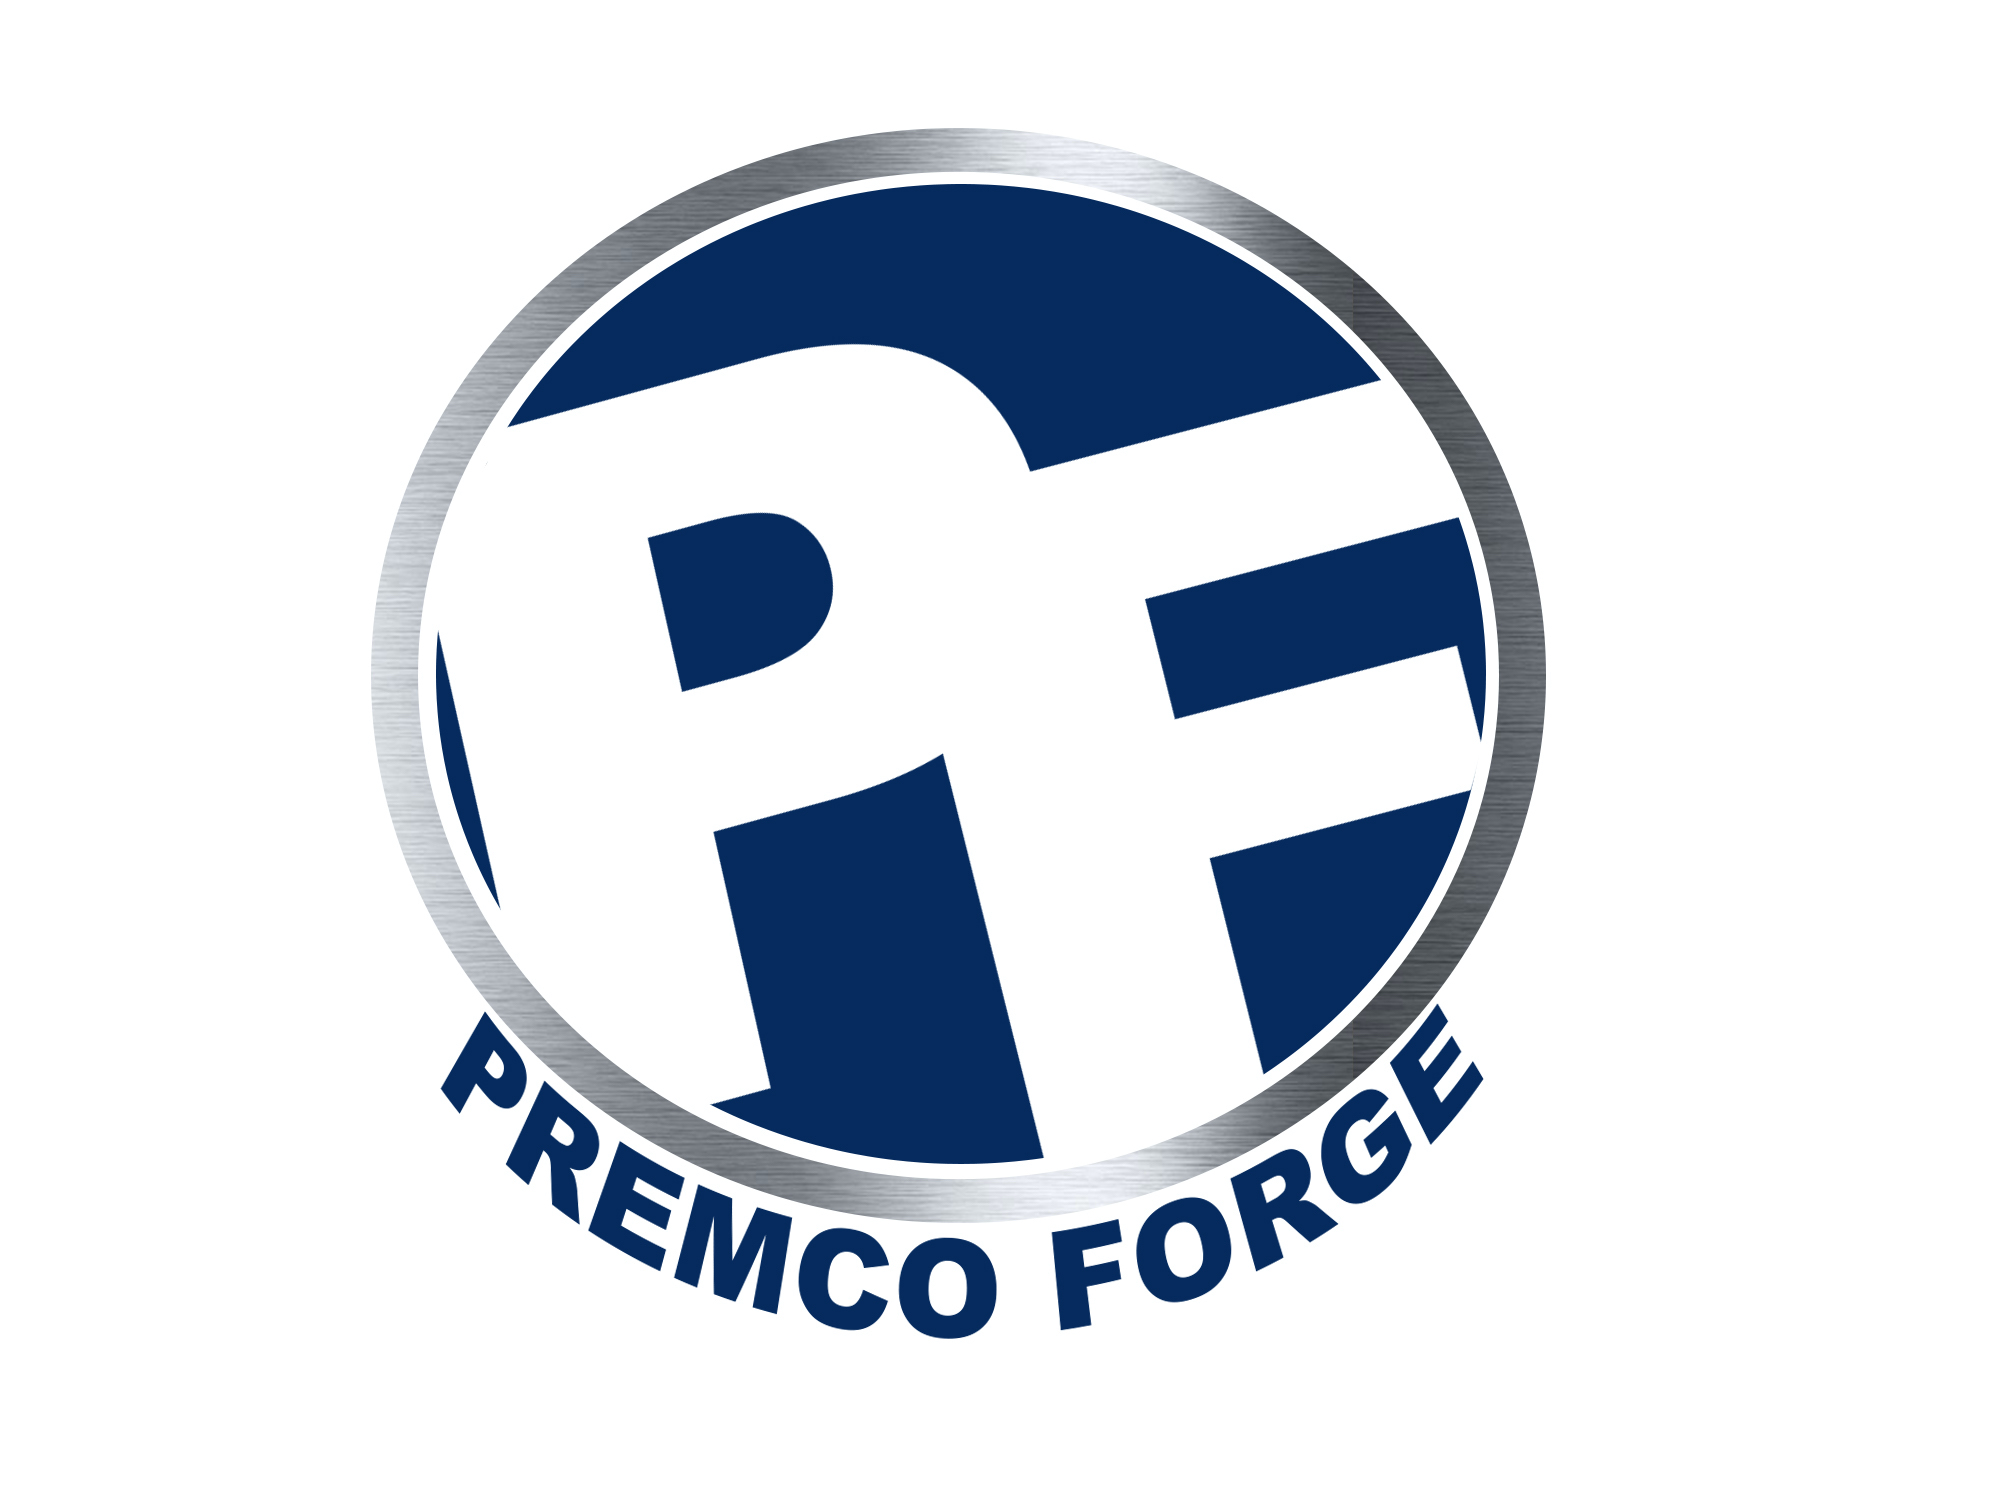 PREMCO FORGE HAND ALUMINUM